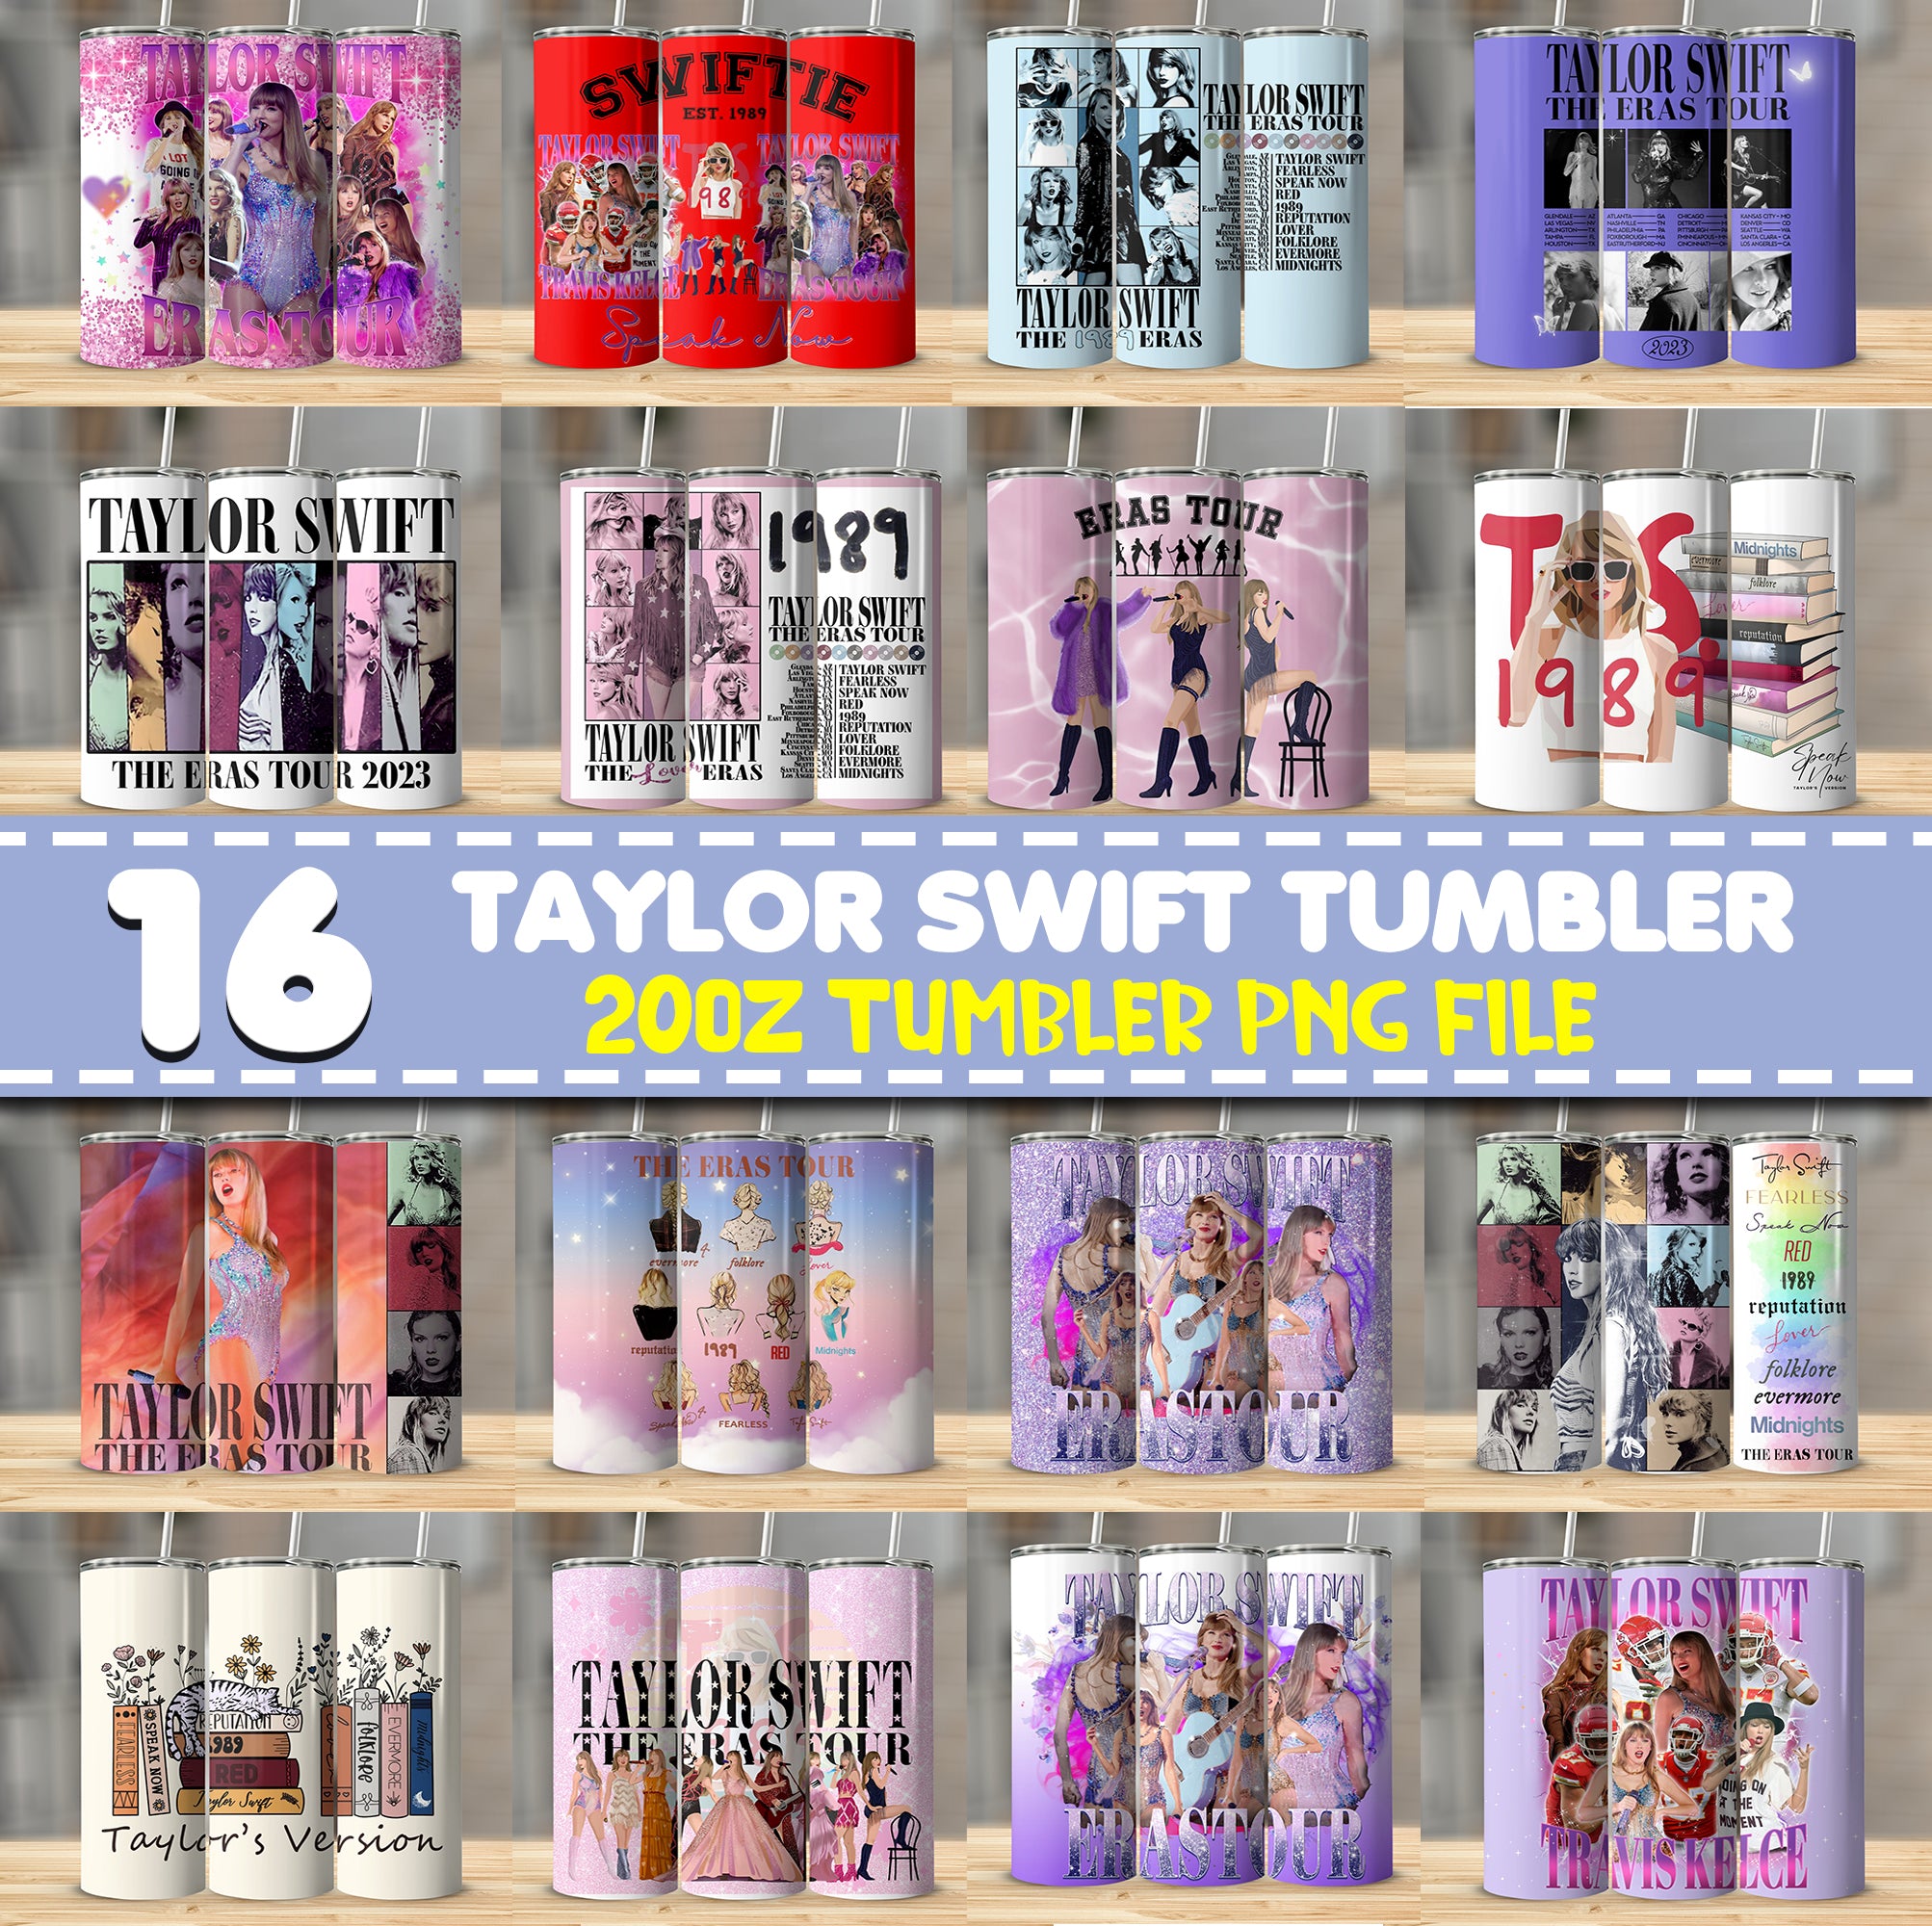 Taylor Swift The Erars Tour tumbler 20oz bundle png